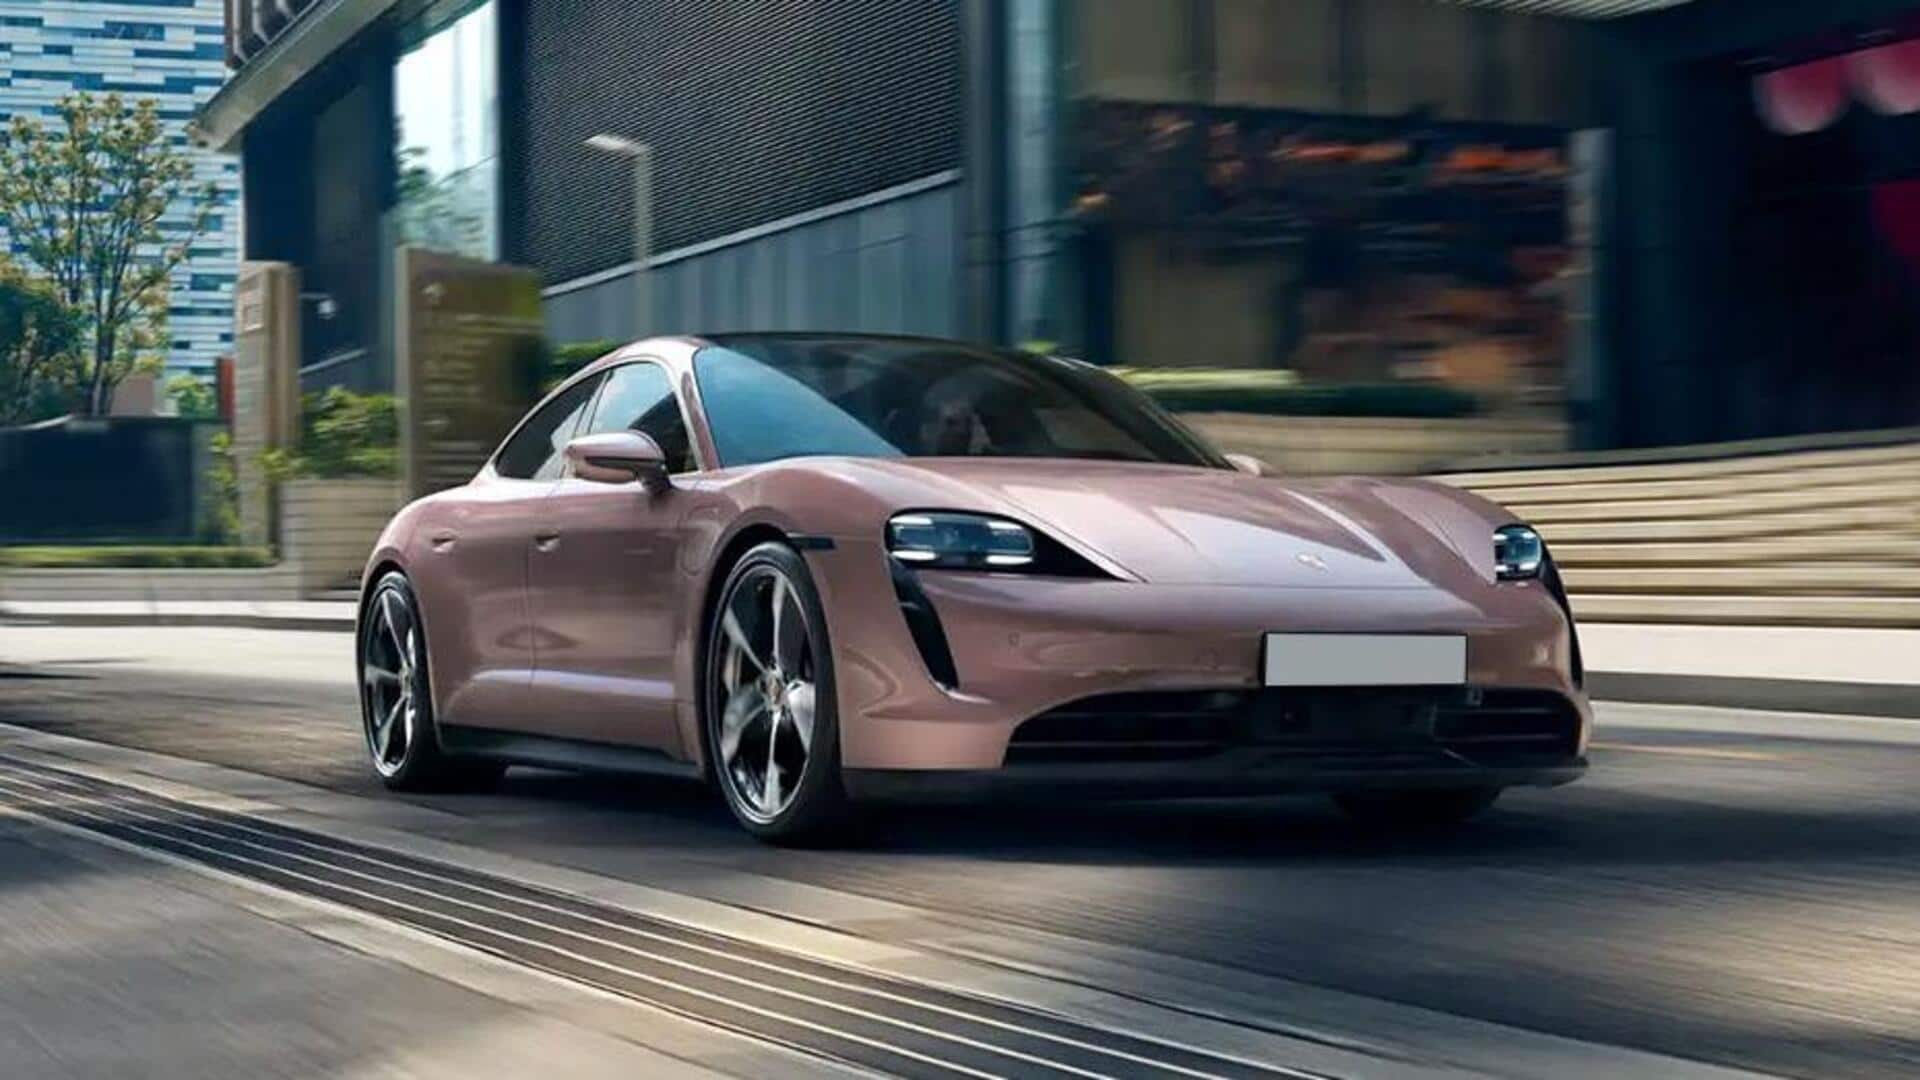 Porsche to reveal 'most dynamic' Taycan EV on March 11